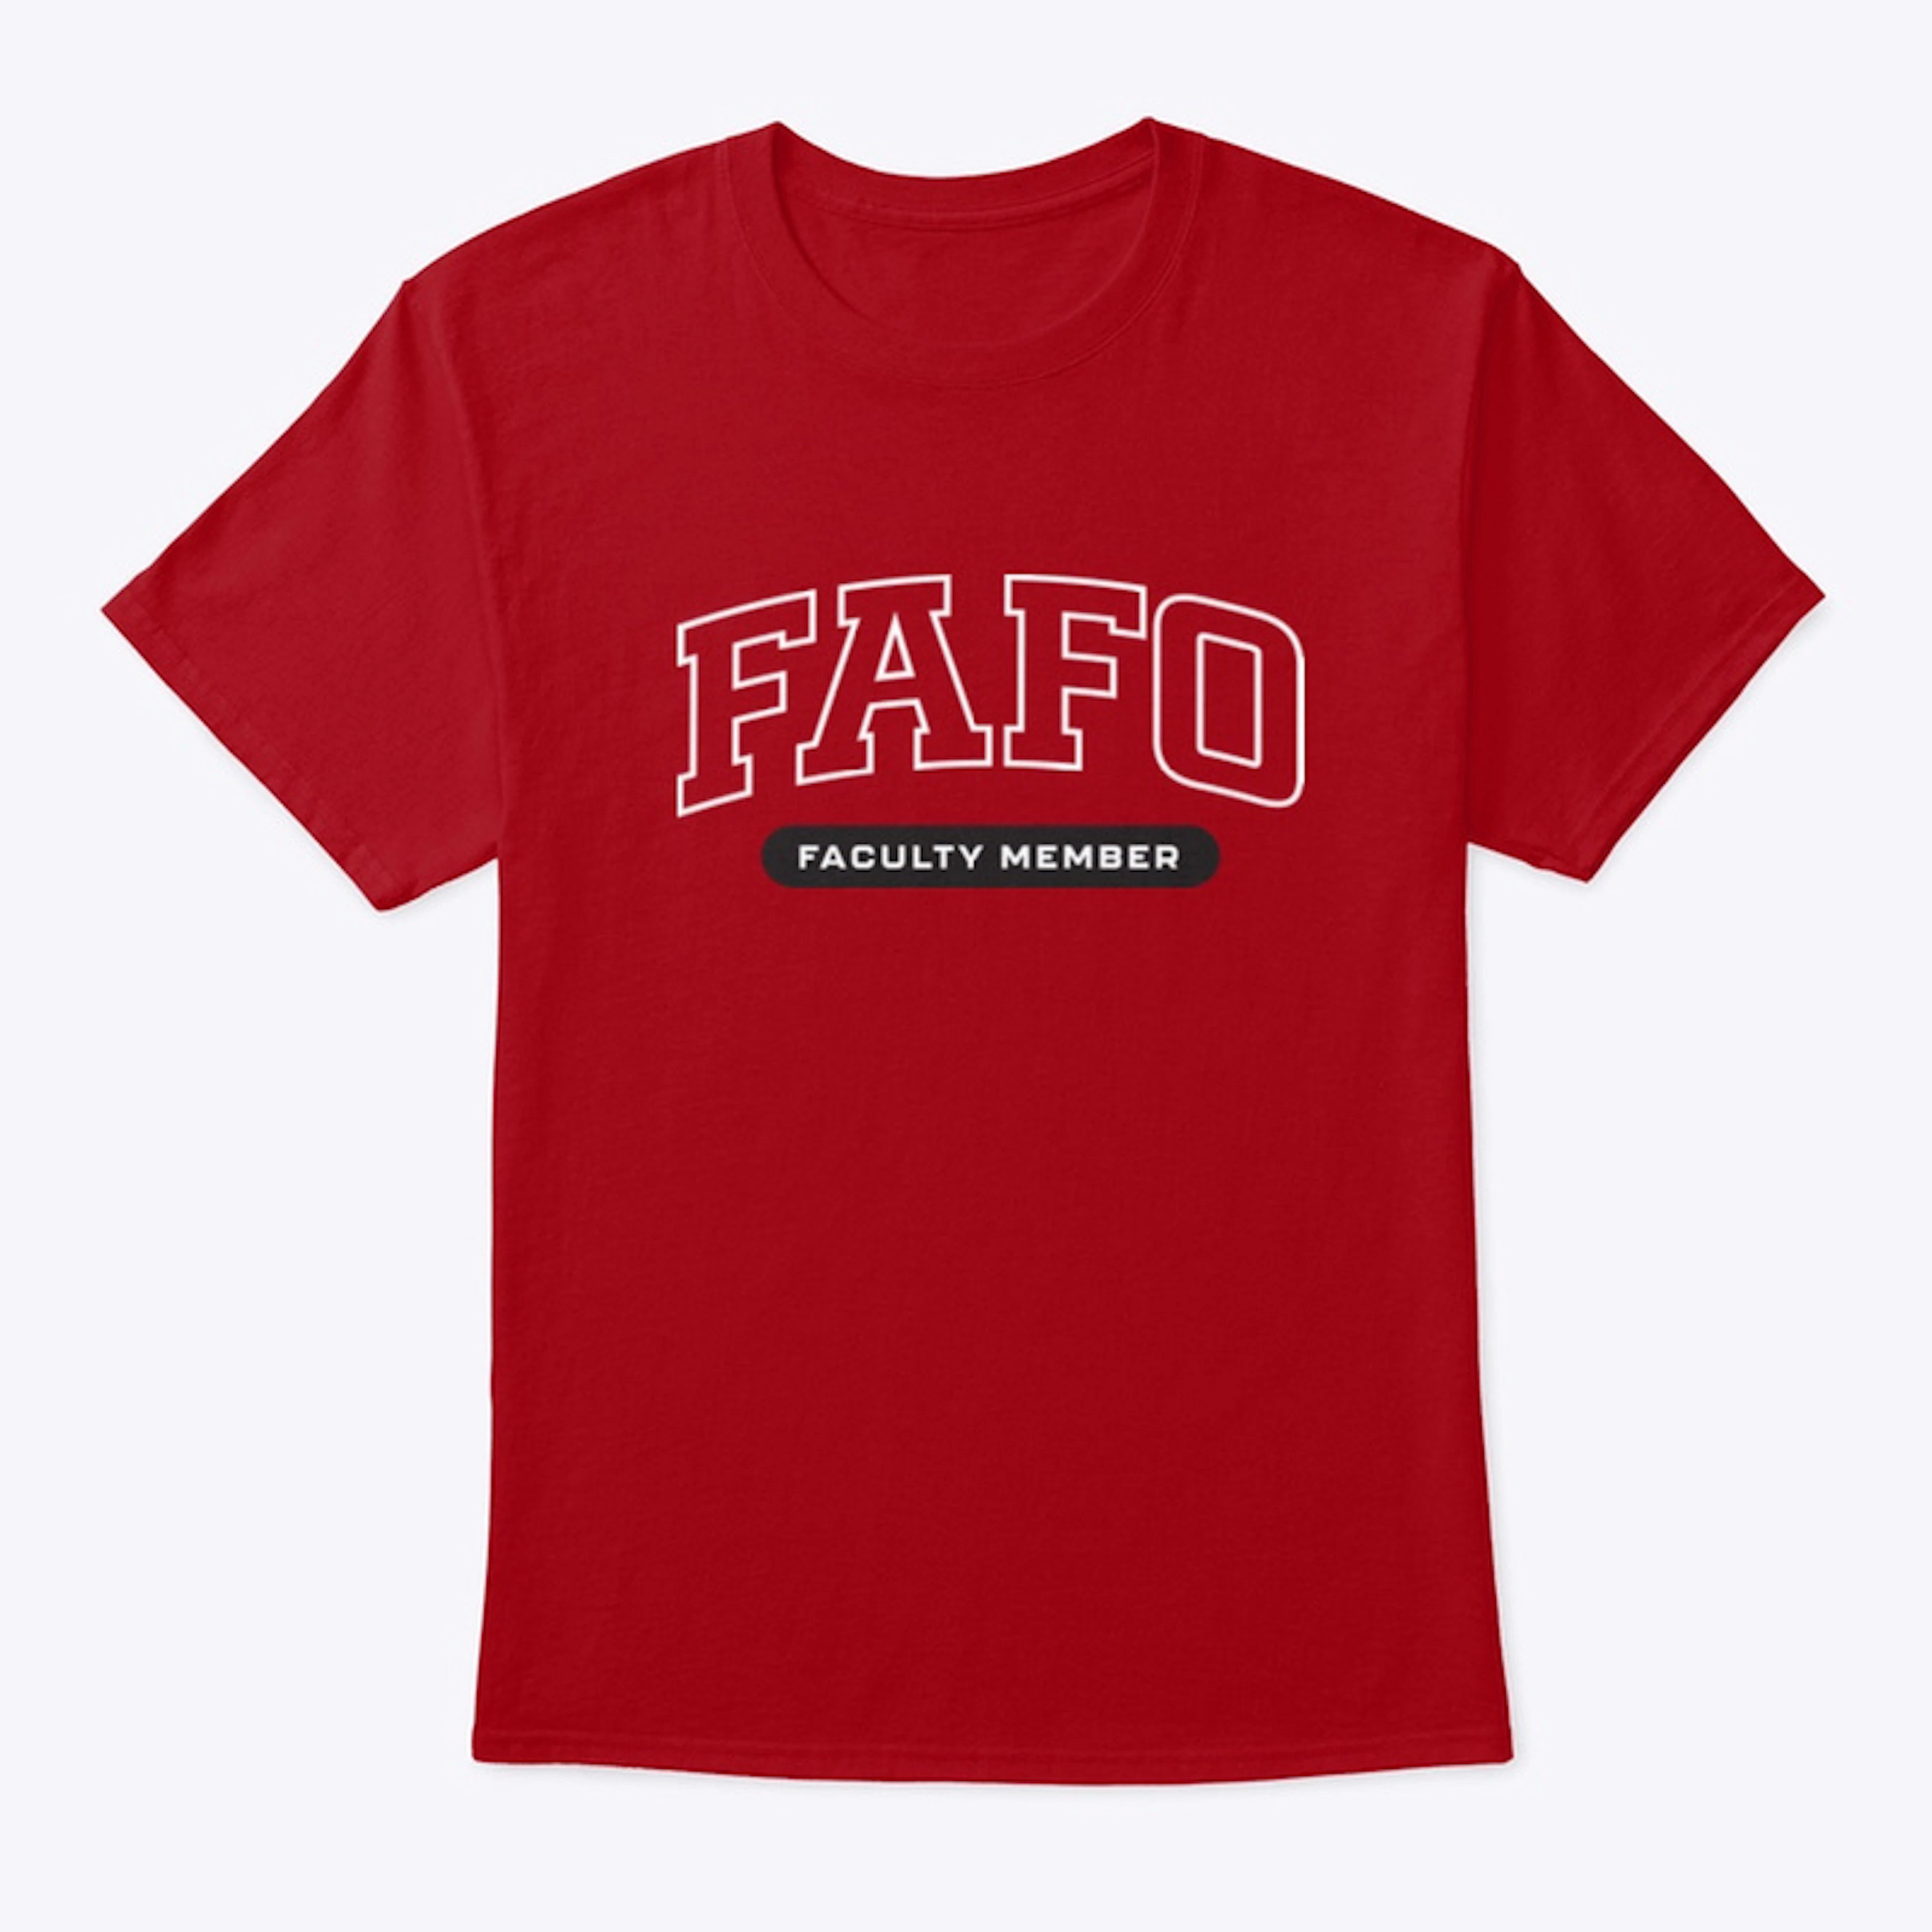 FAFO Faculty Member